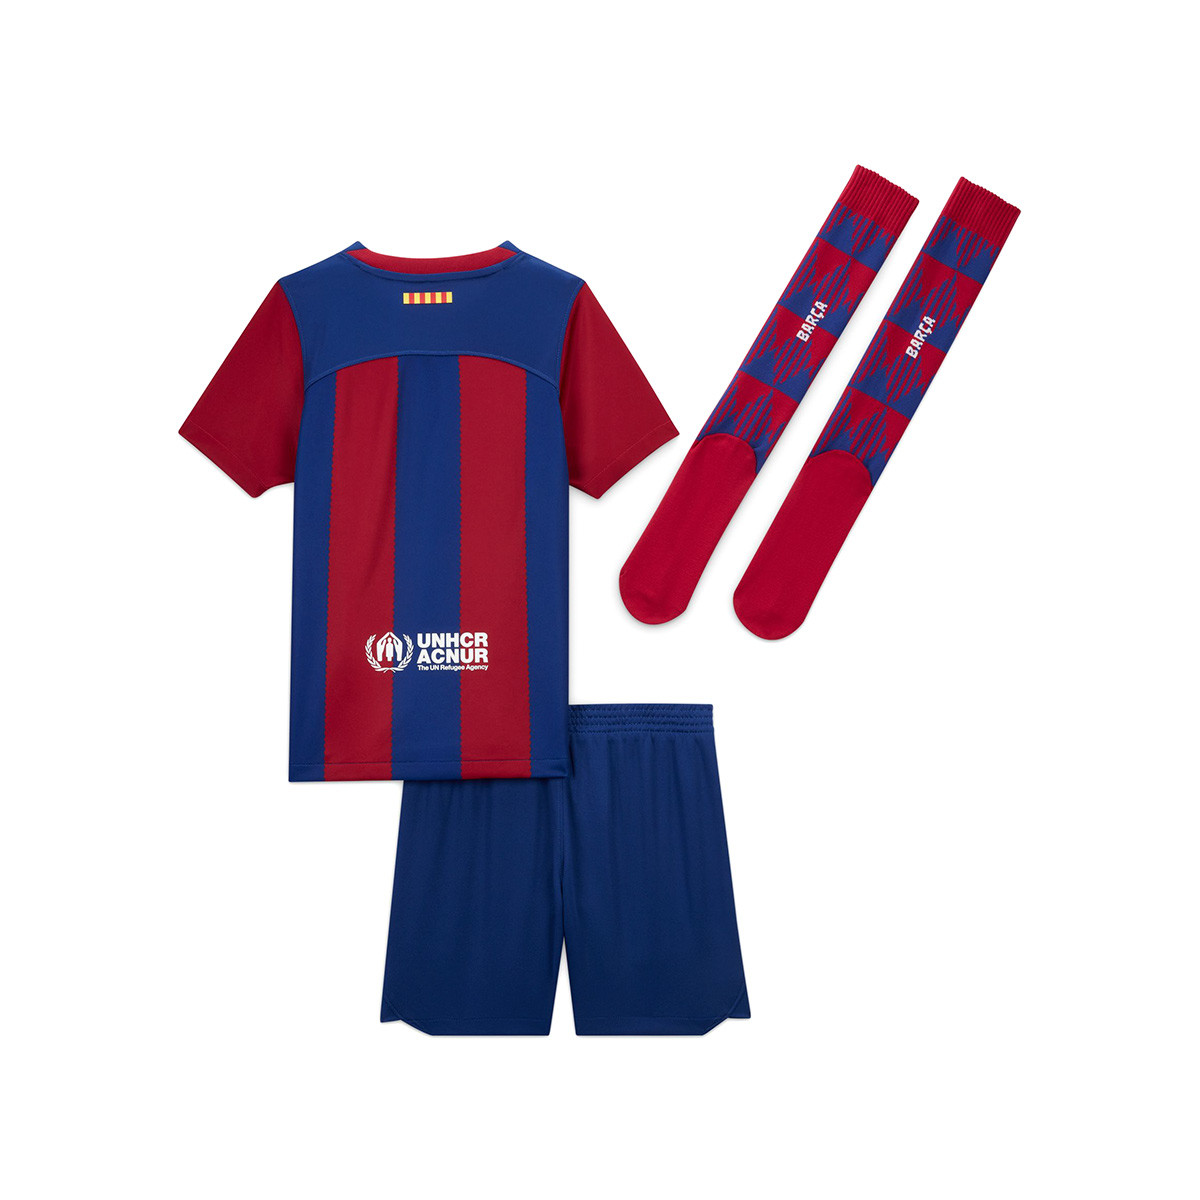 Home Accessoire Foot - Sac de Sport Enfant Football FC Barcelone